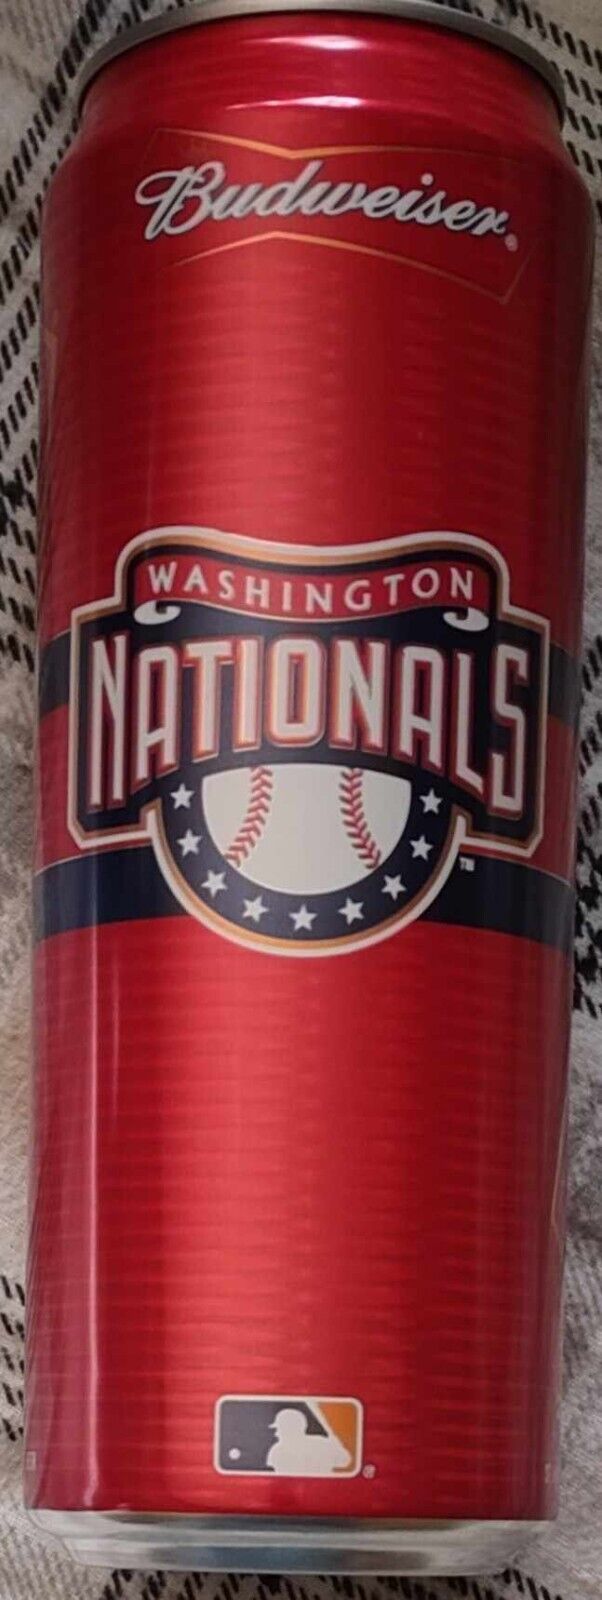 2008   24 oz. Budweiser Beer Can  Washington Nationals  MLB   662203